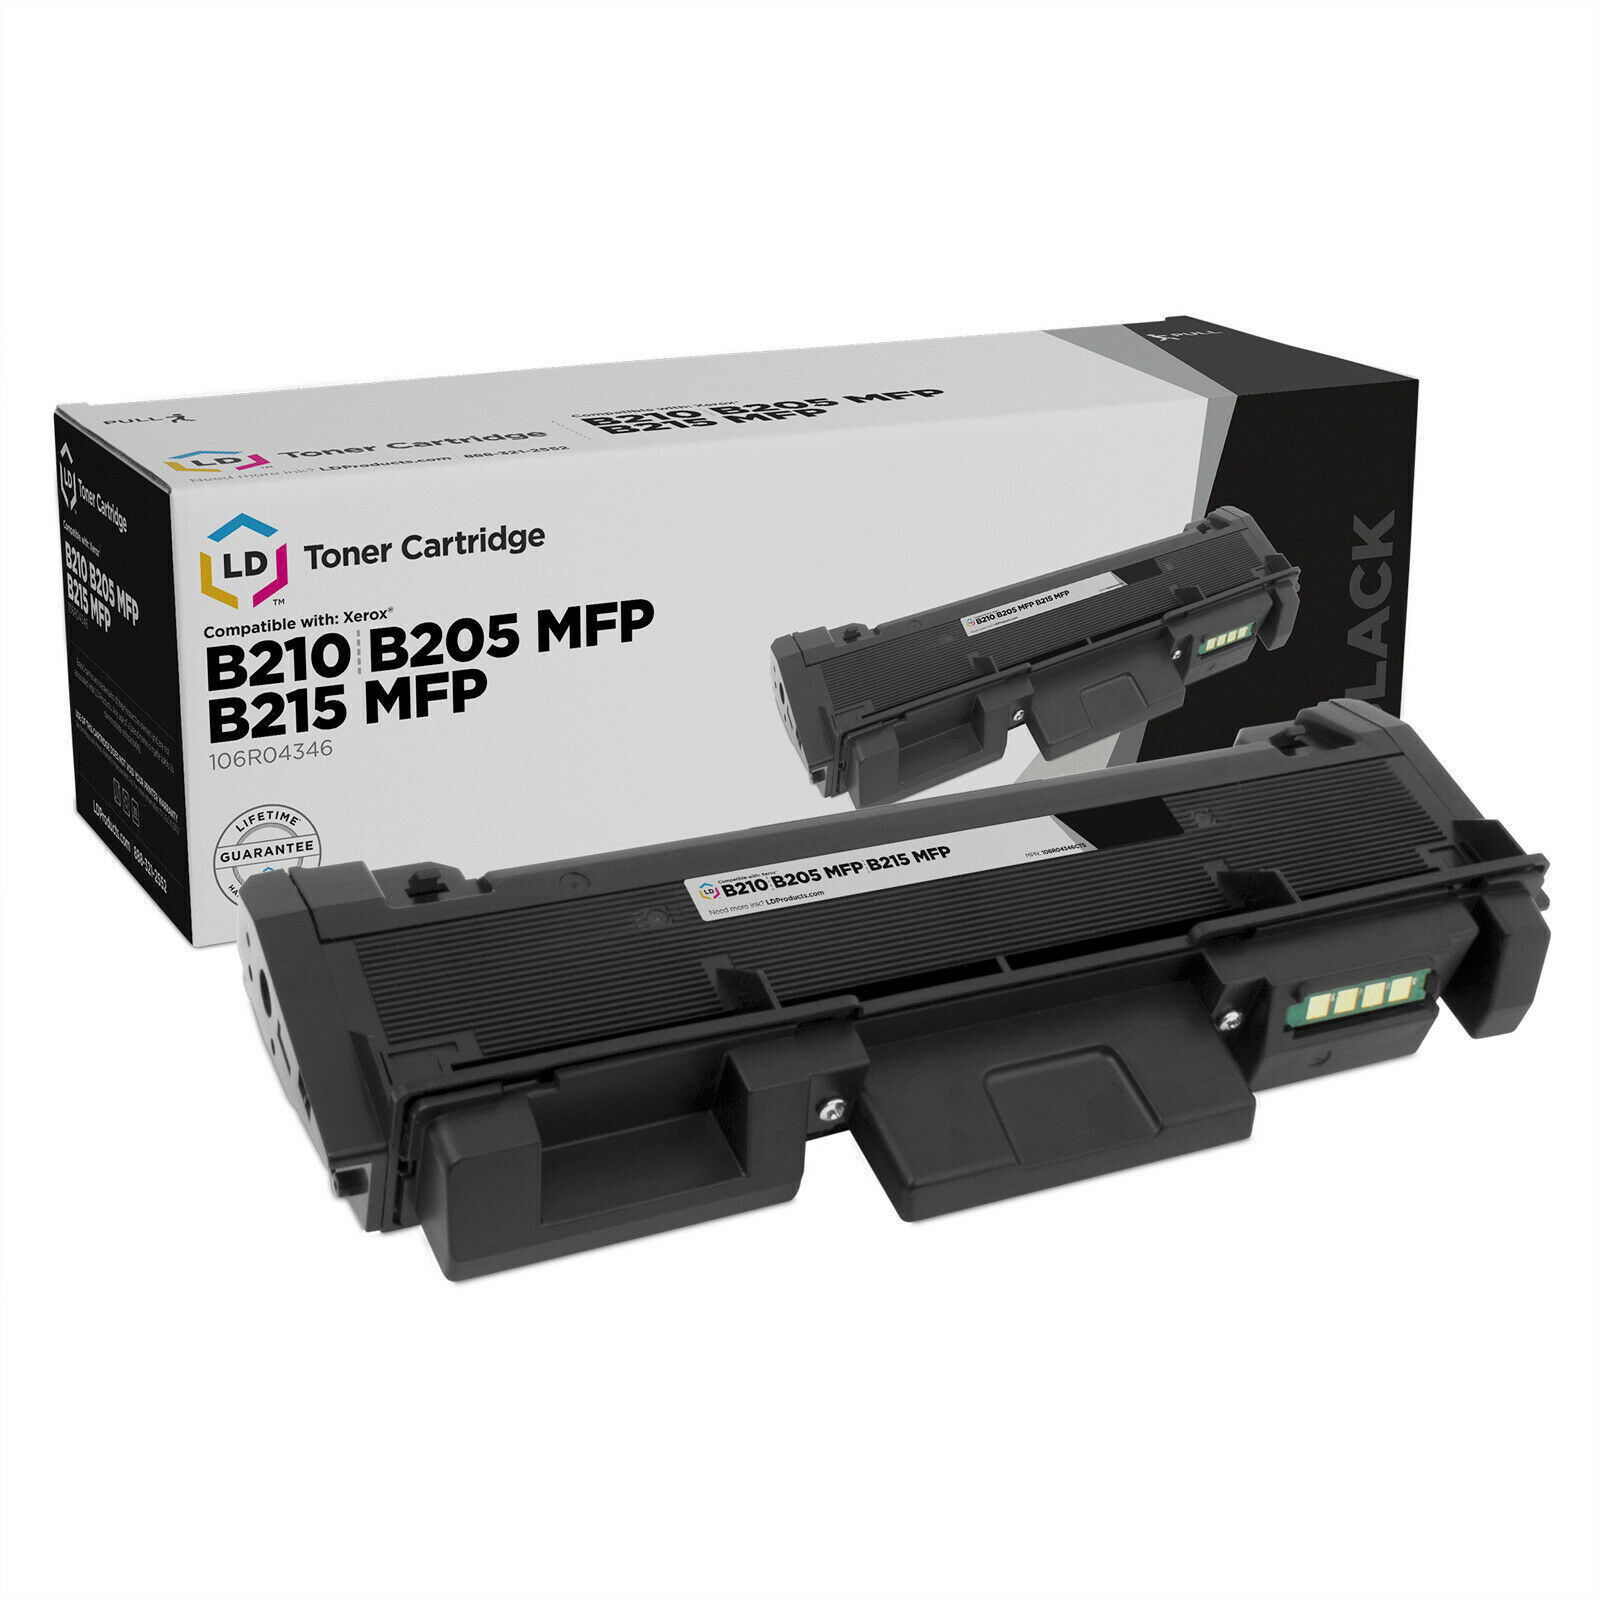 LD Compatible Xerox 106R04346 Black Toner Cartridge for B205, B210, B215